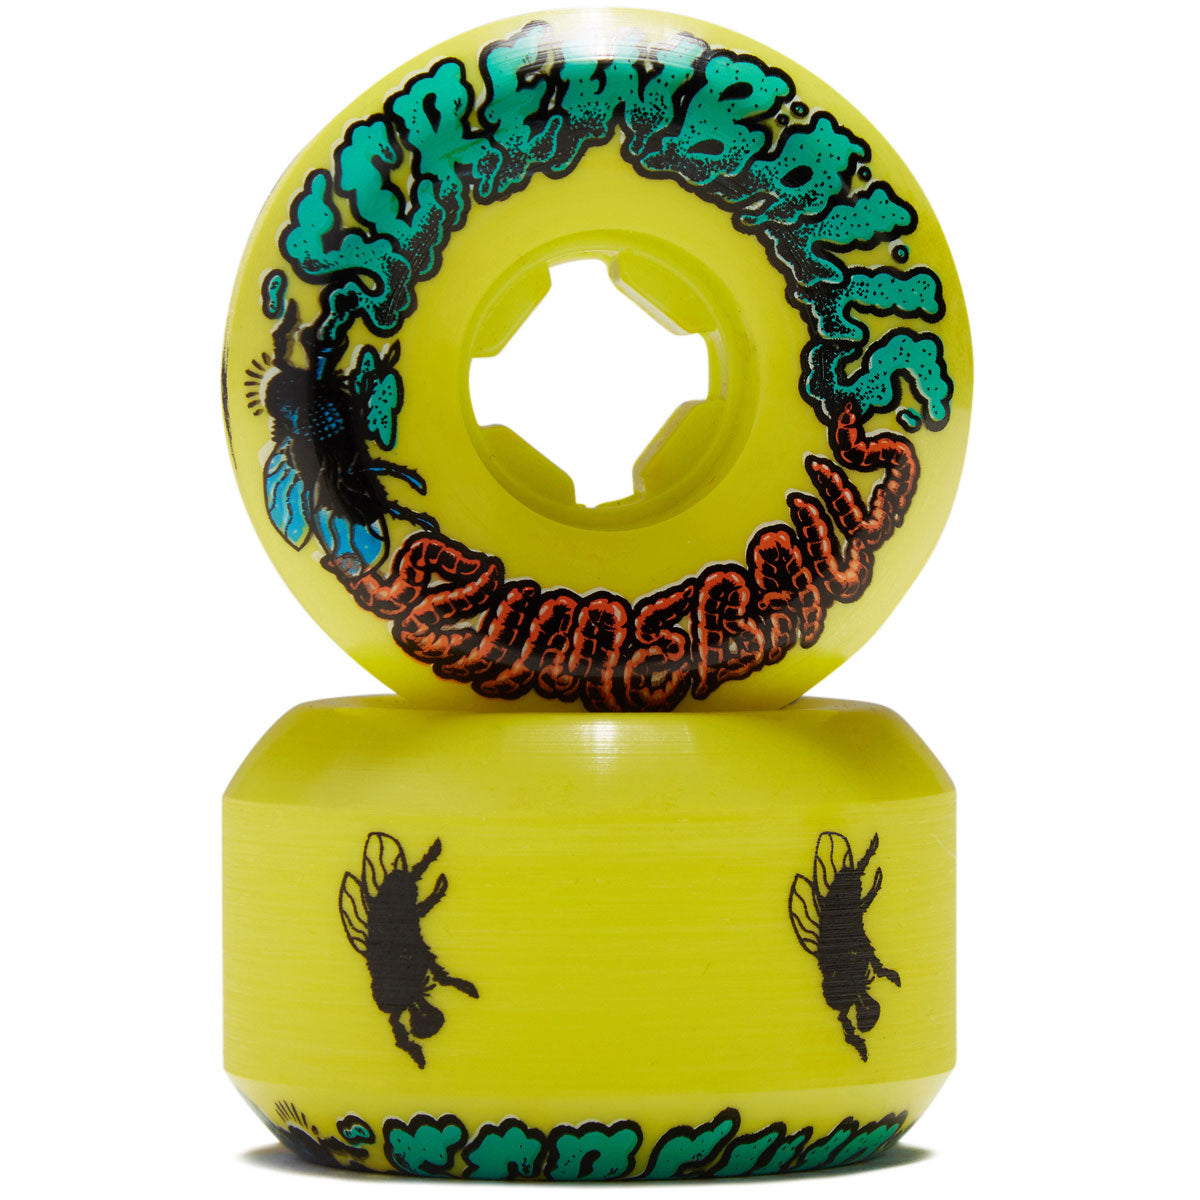 Slime Balls Screw Balls 99a Skateboard Wheels - Yellow - 54mm image 2